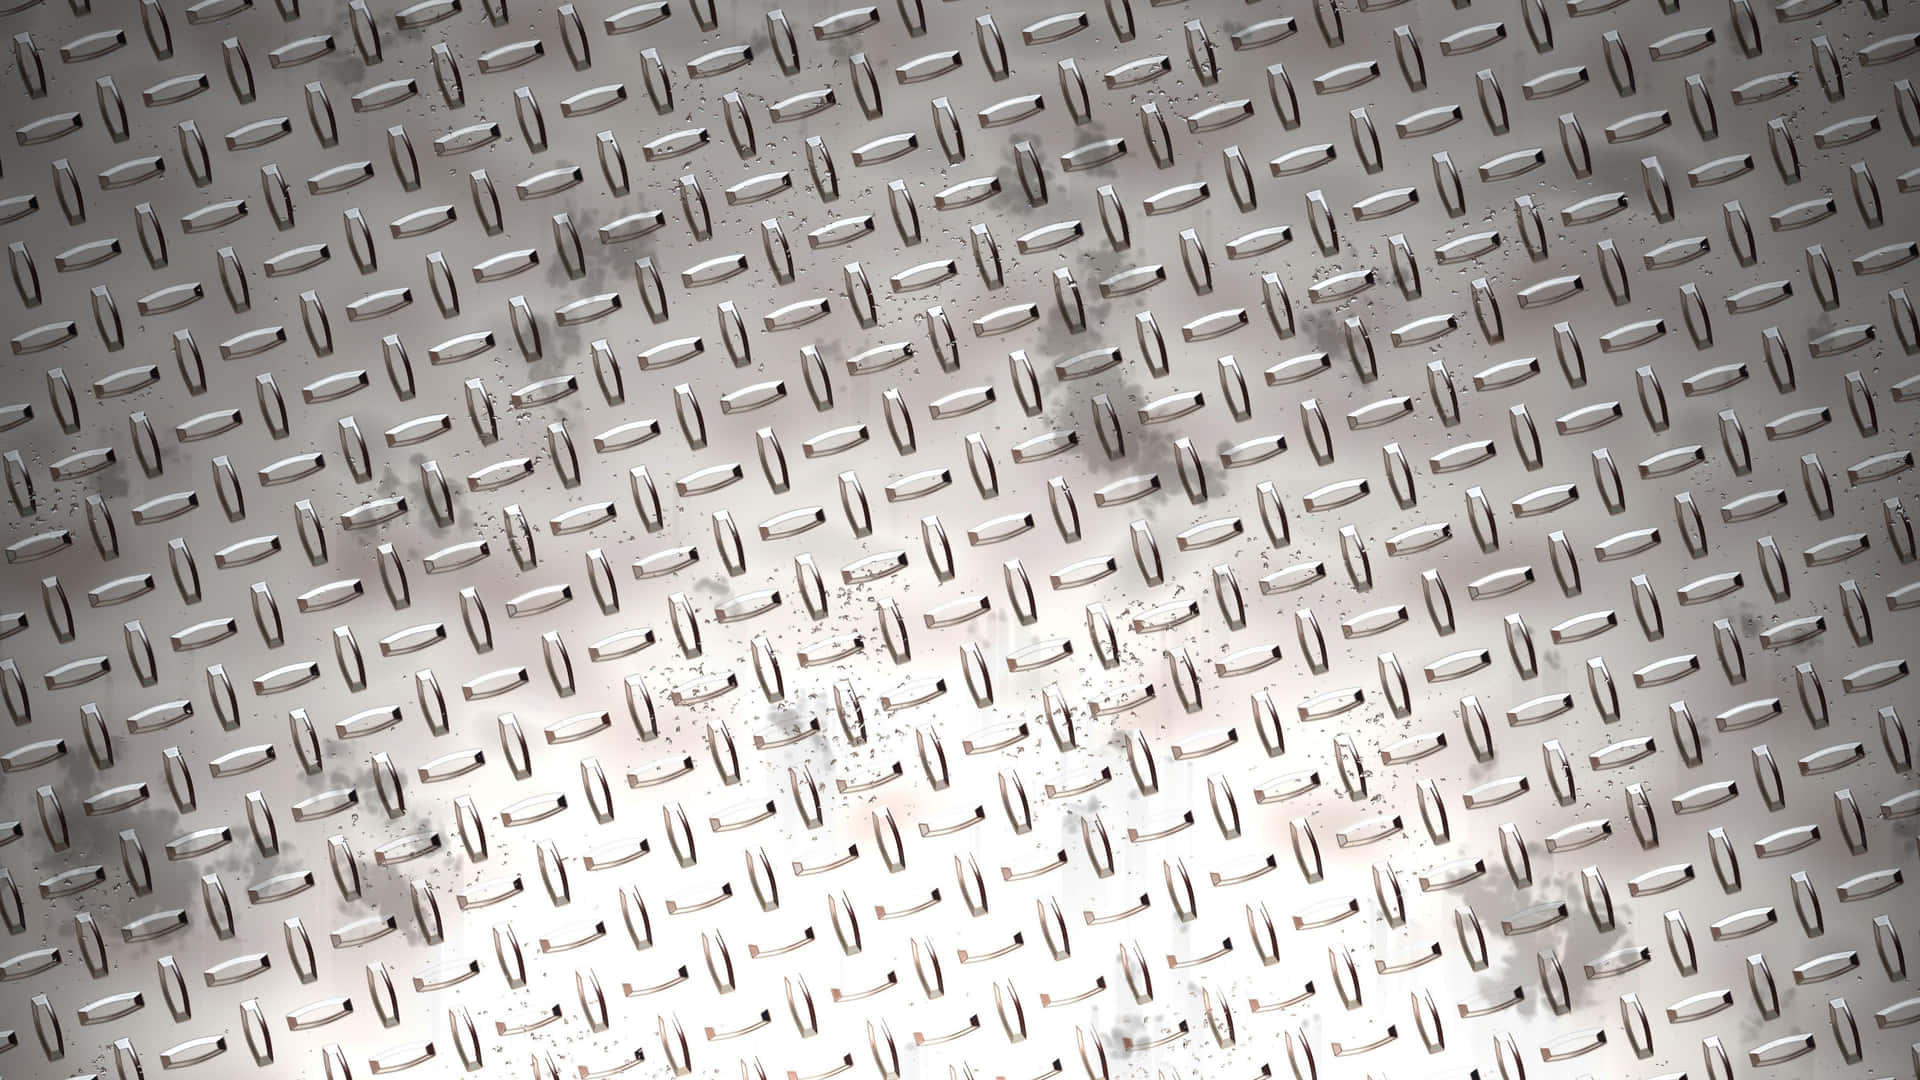 Shiny Diamond Plate Texture as Background